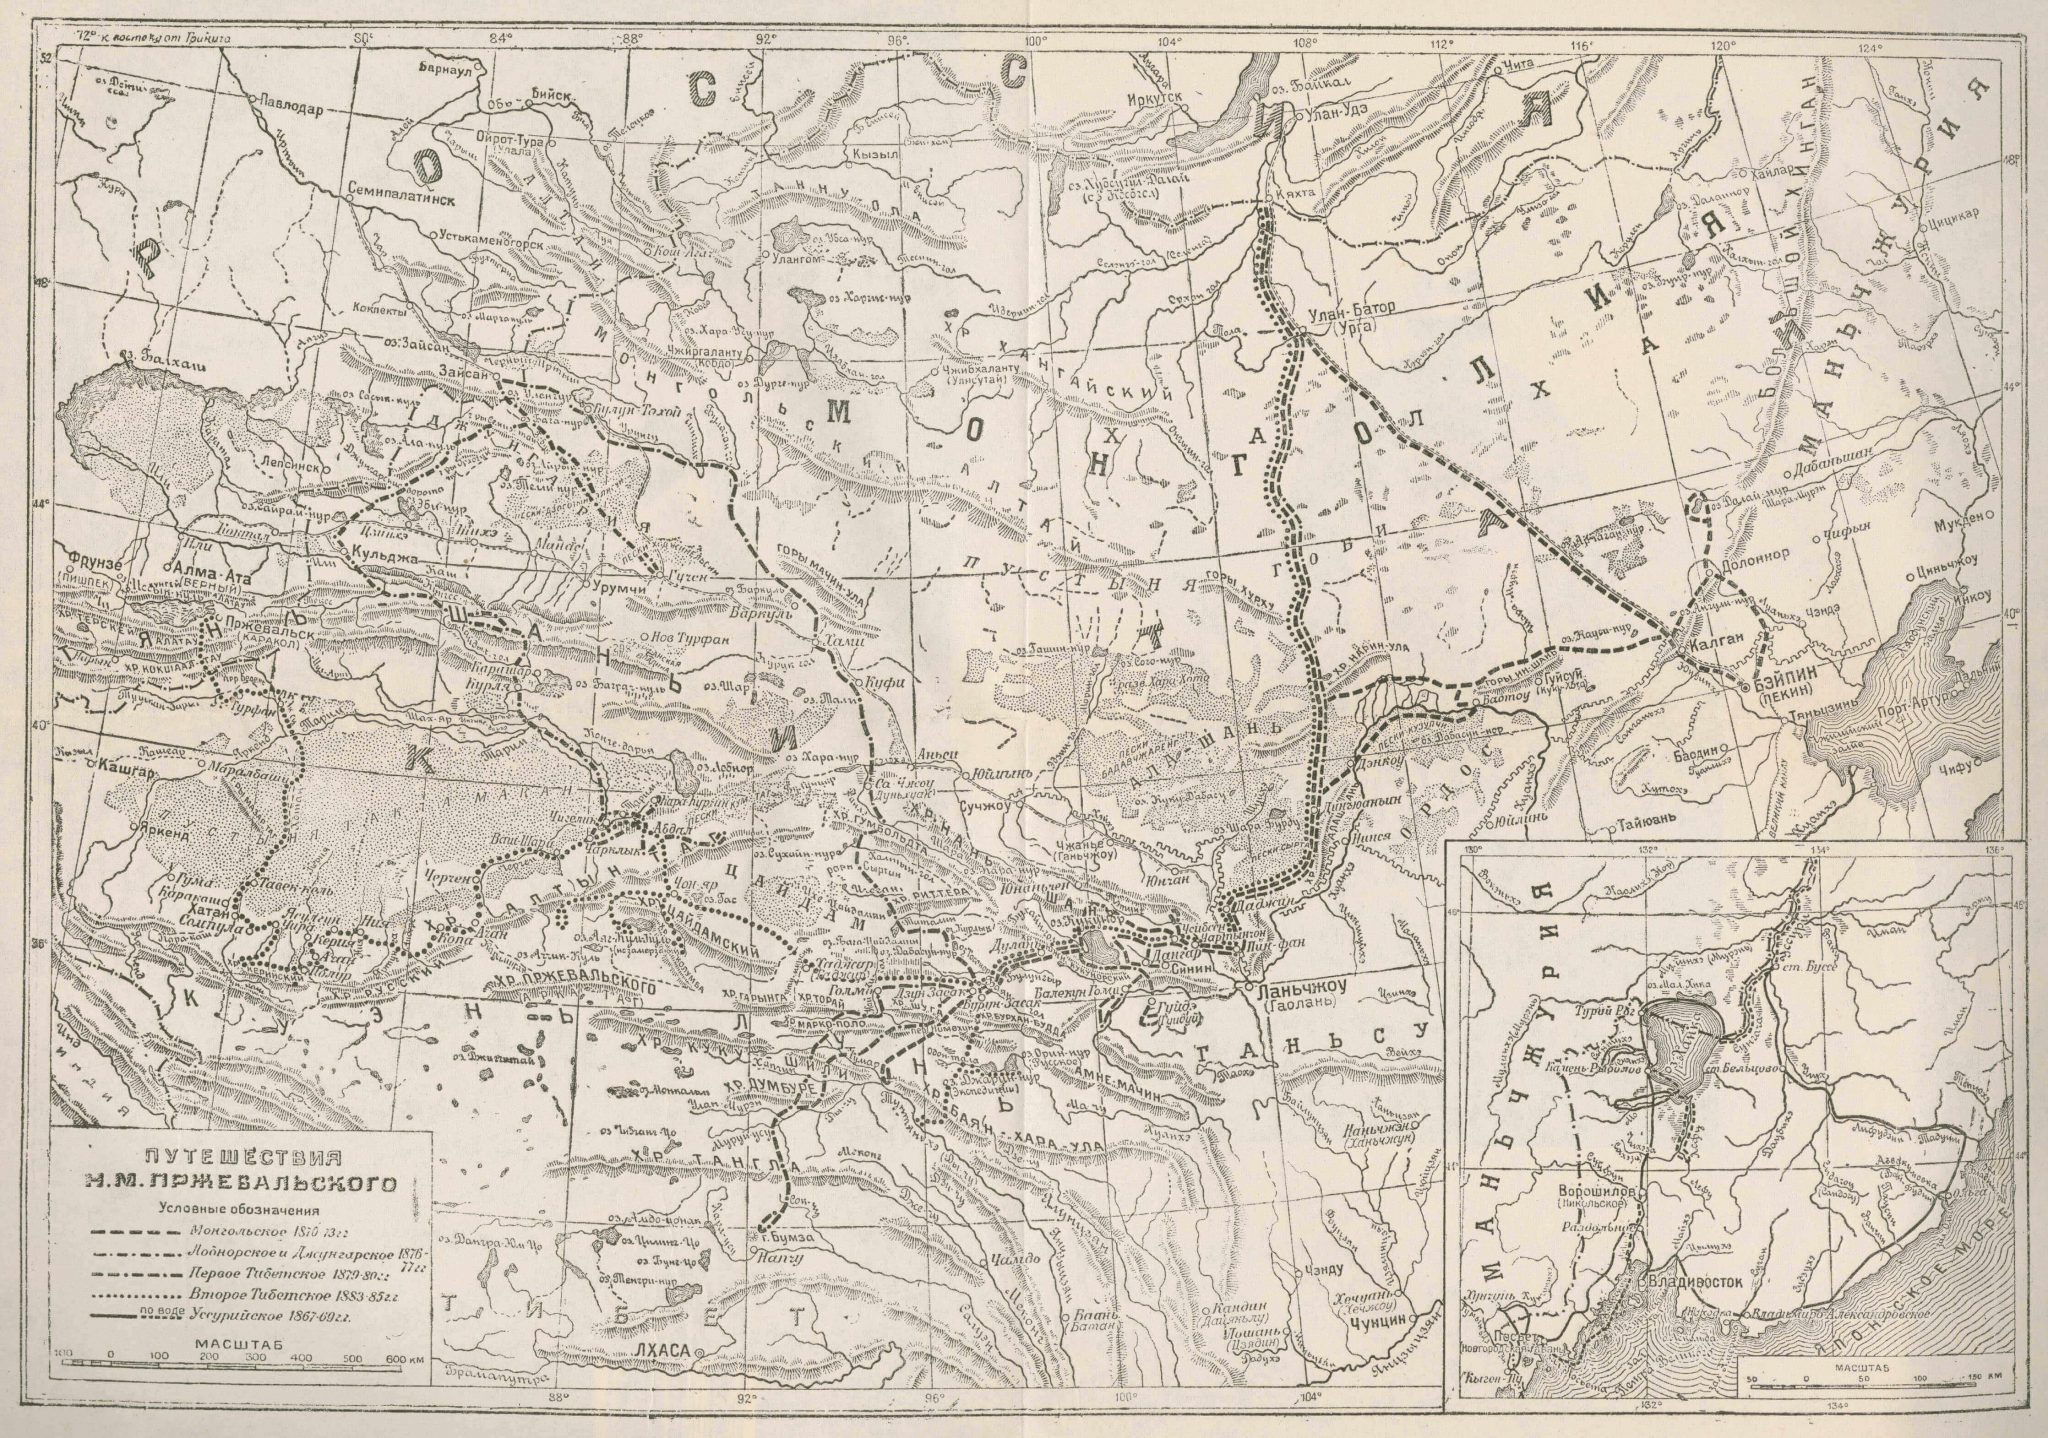 Przevalskij’s expeditions to Eastern Turkestan, 1867-1880